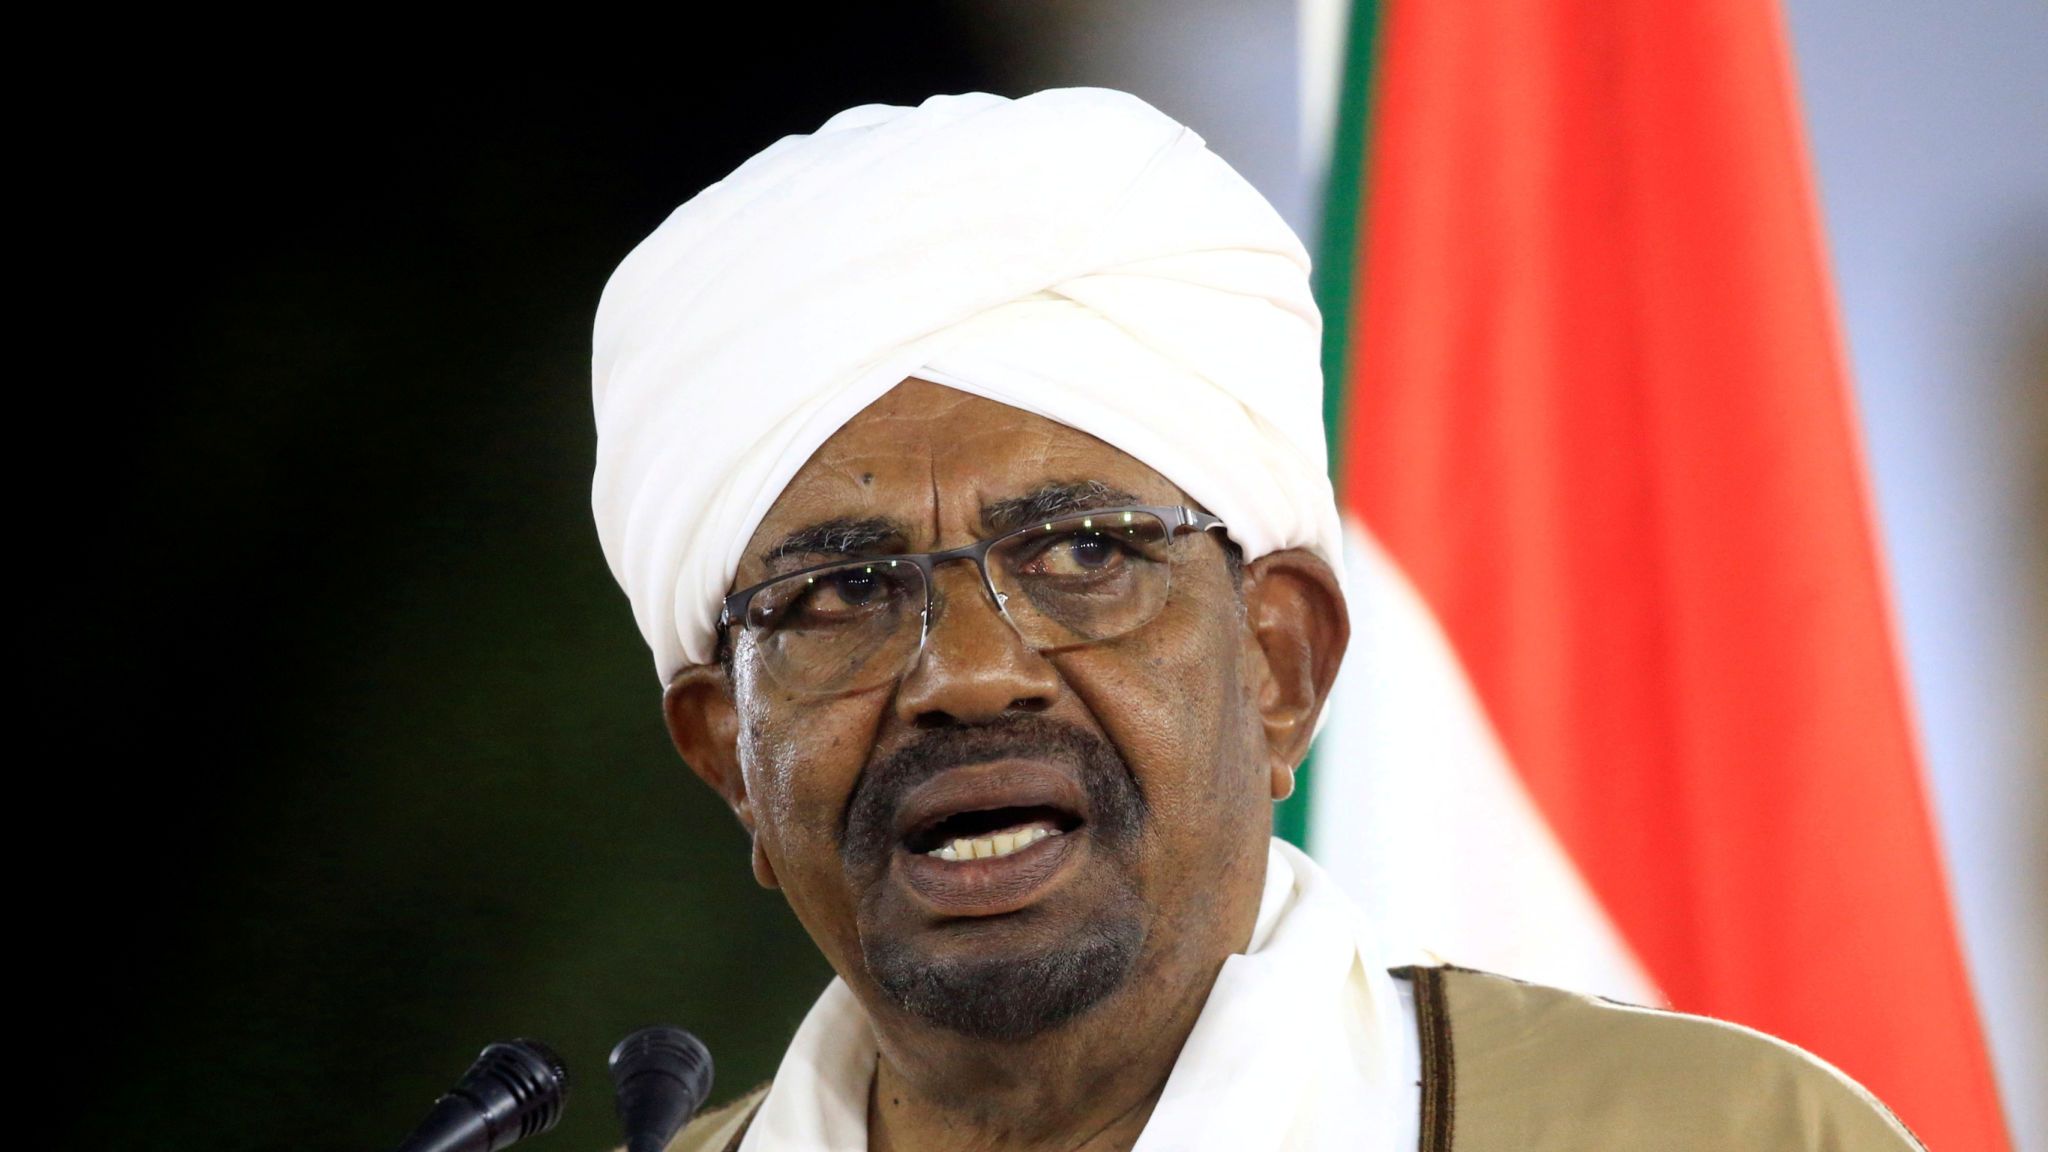 Sudan’s President Omar al Bashir steps down